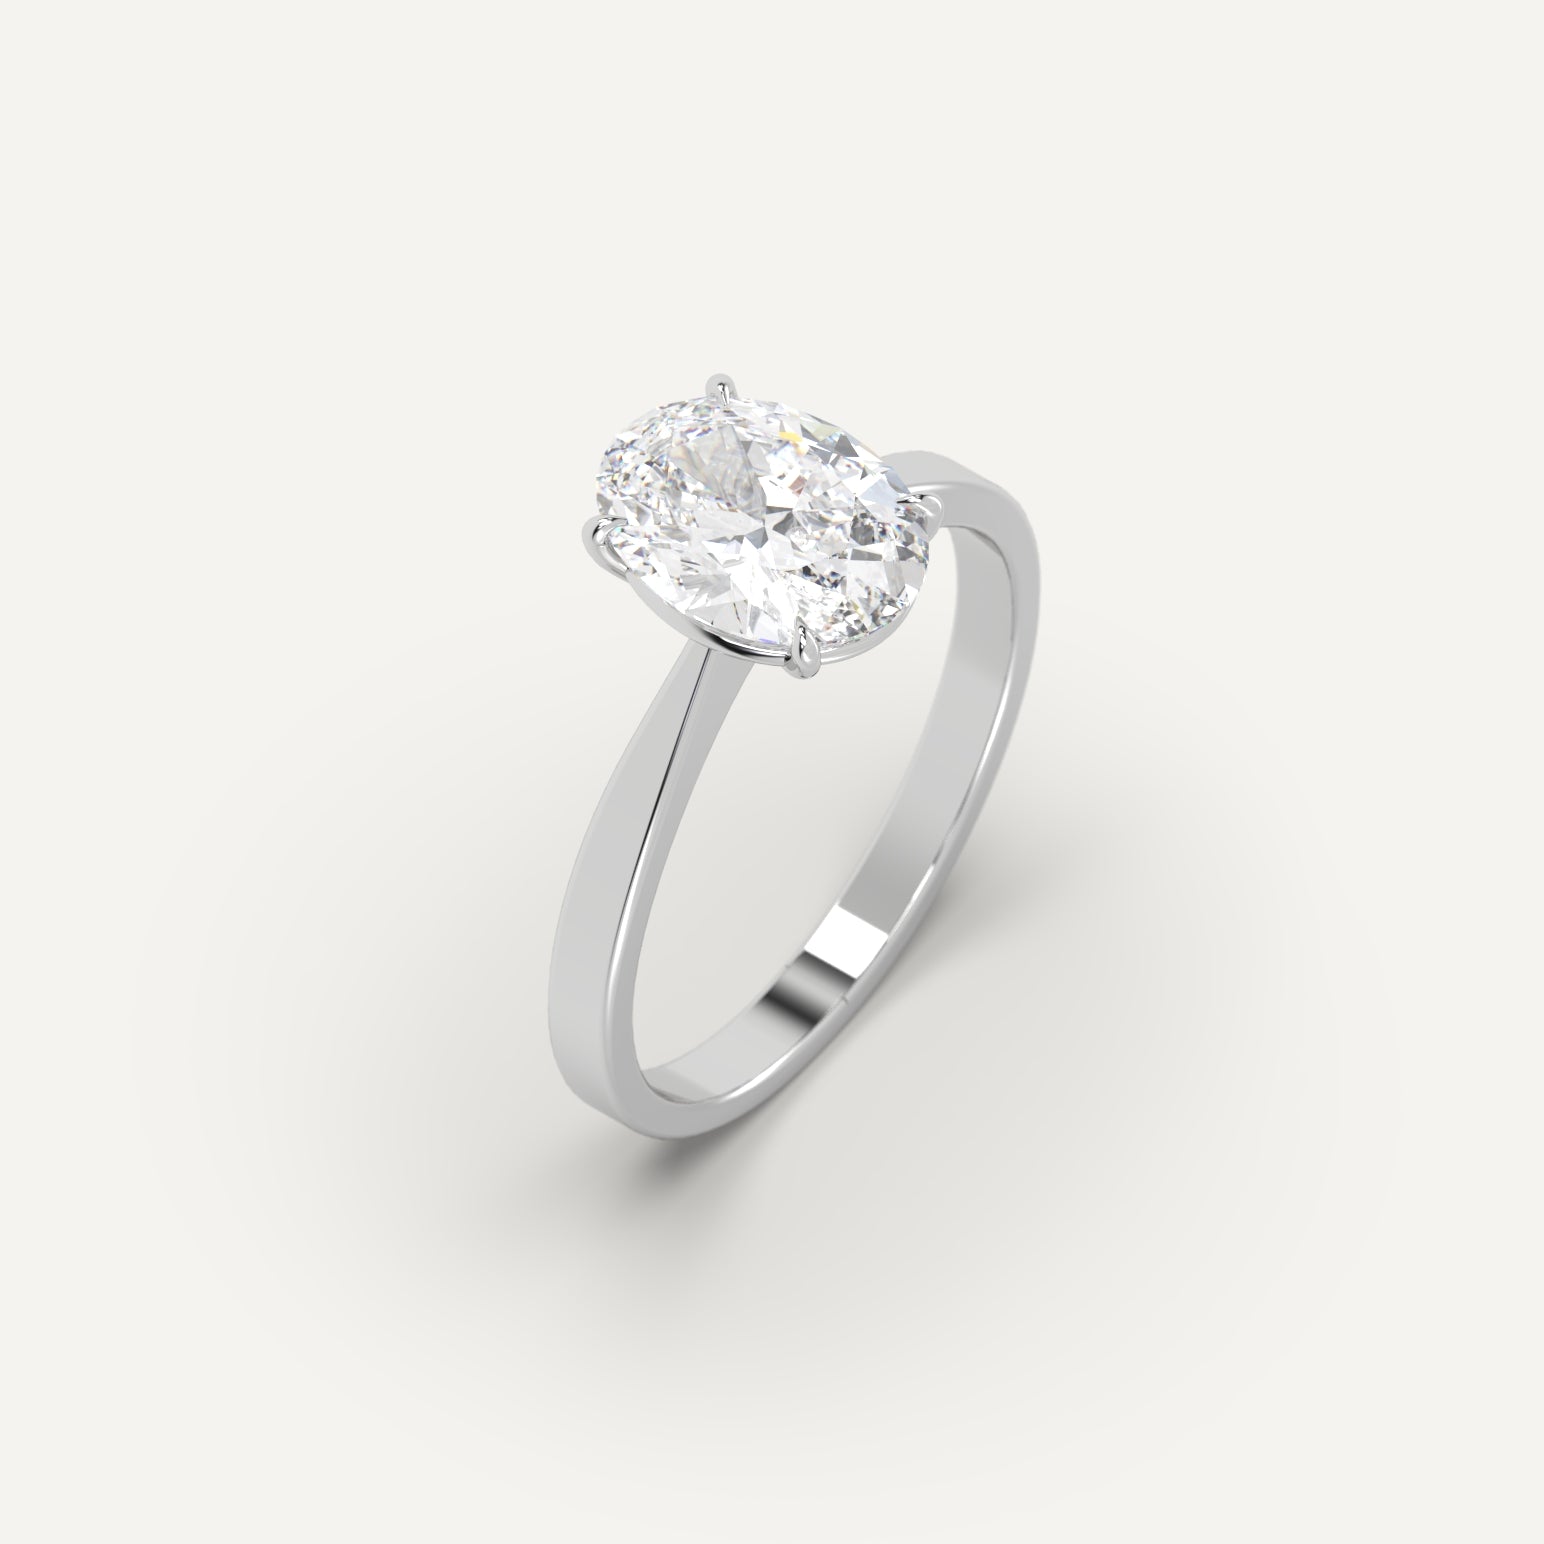 2 carat Oval Cut Engagement Ring in 950 Platinum